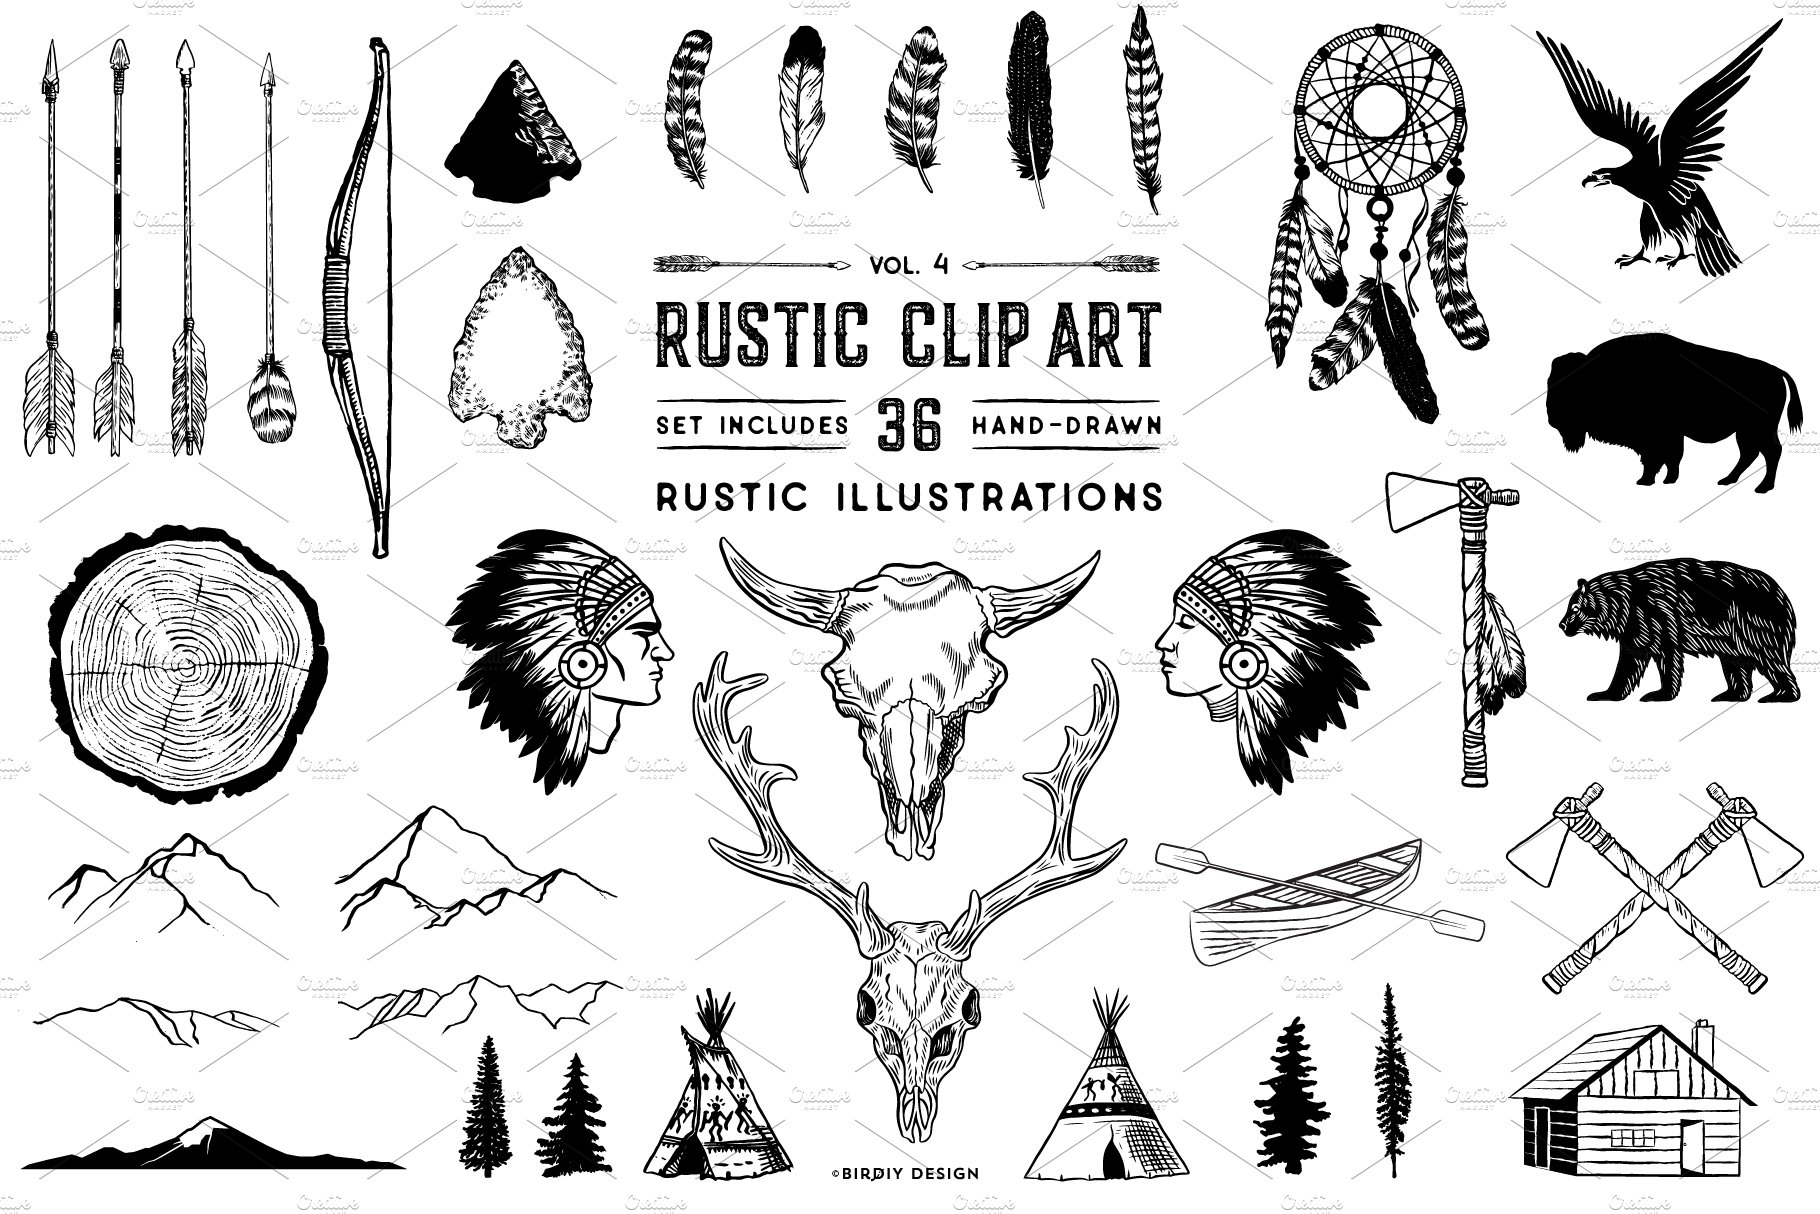 Rustic Clip Art Volume 4 cover image.